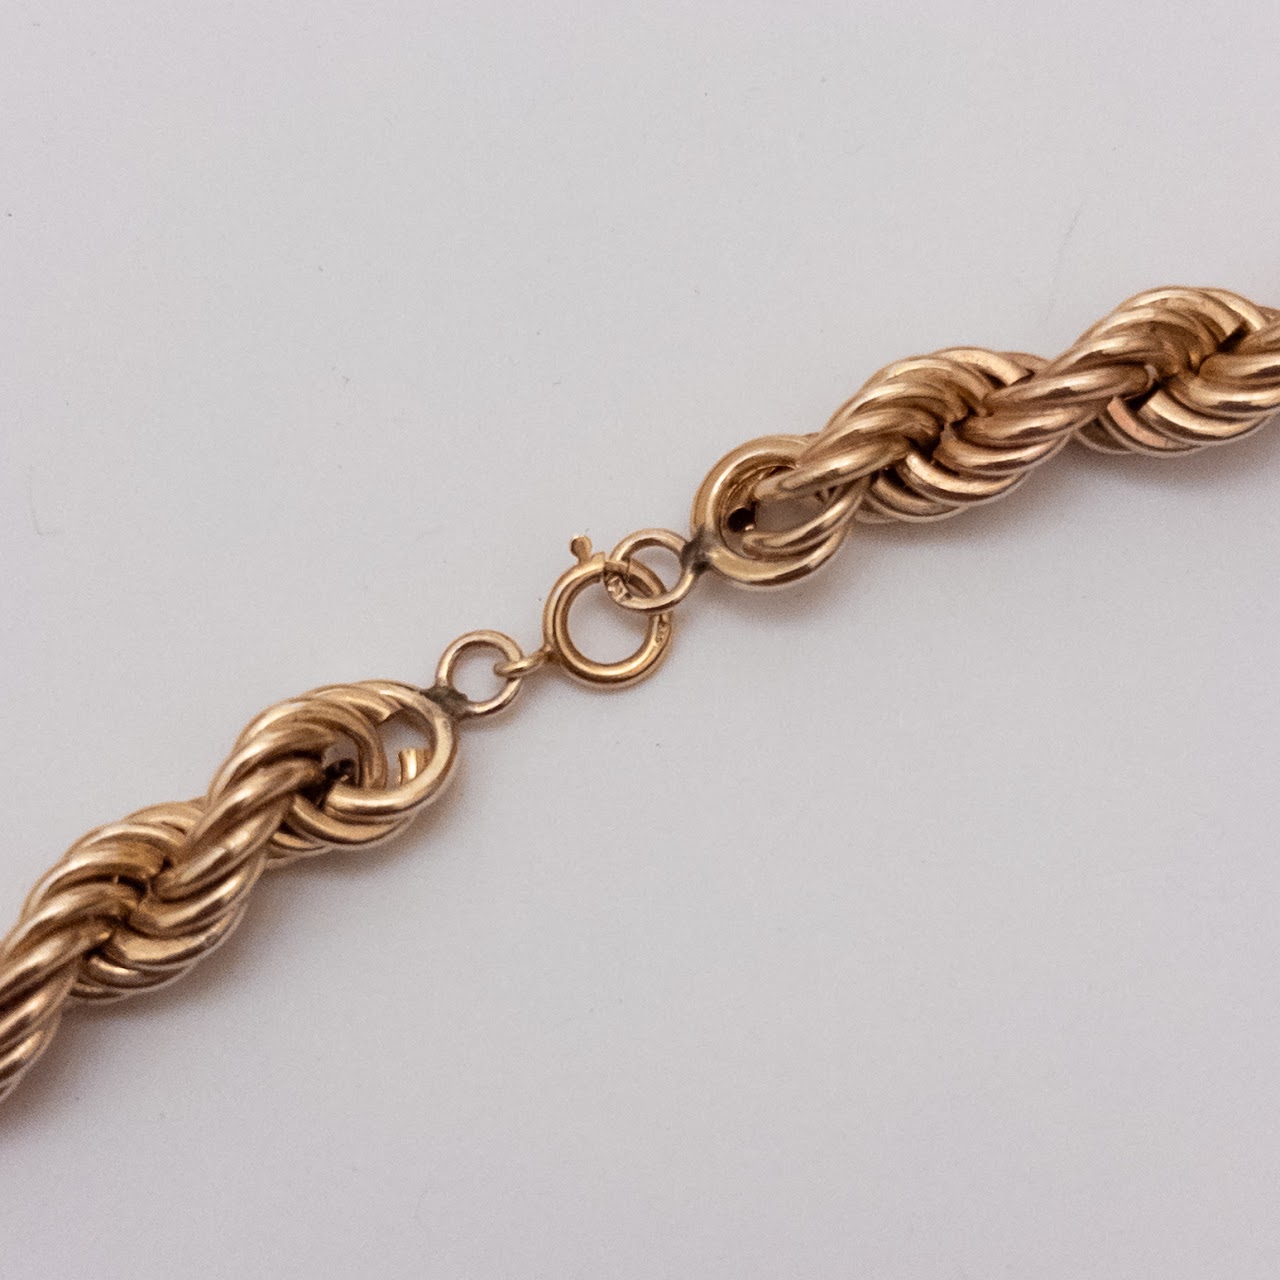 14K Gold Heavy Twist Chain Necklace